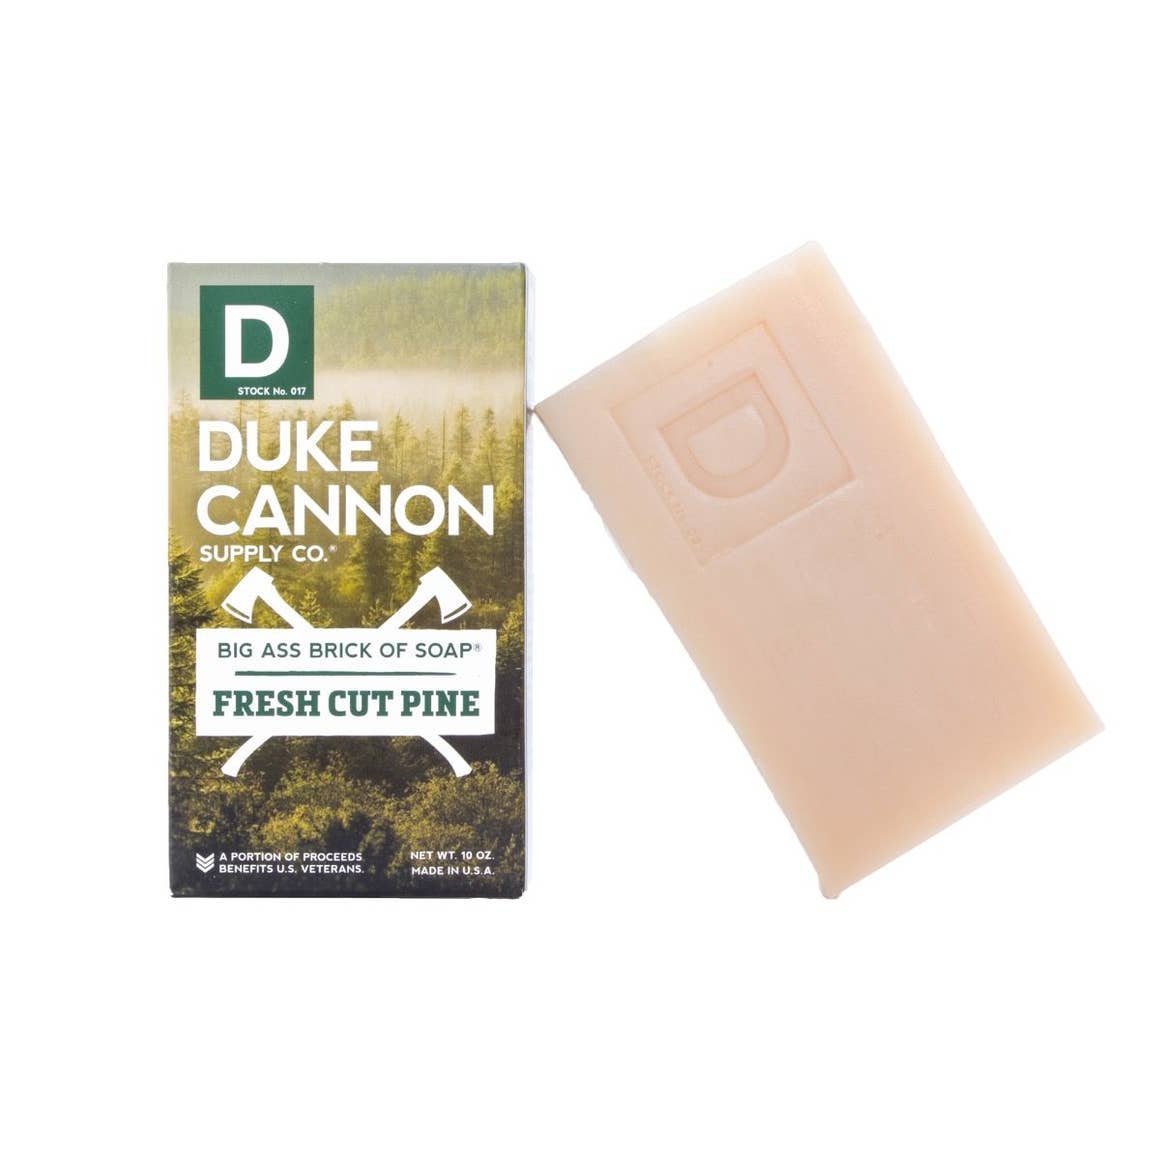 Fresh Cut Pine - Duke Cannon Big Bar of Soap